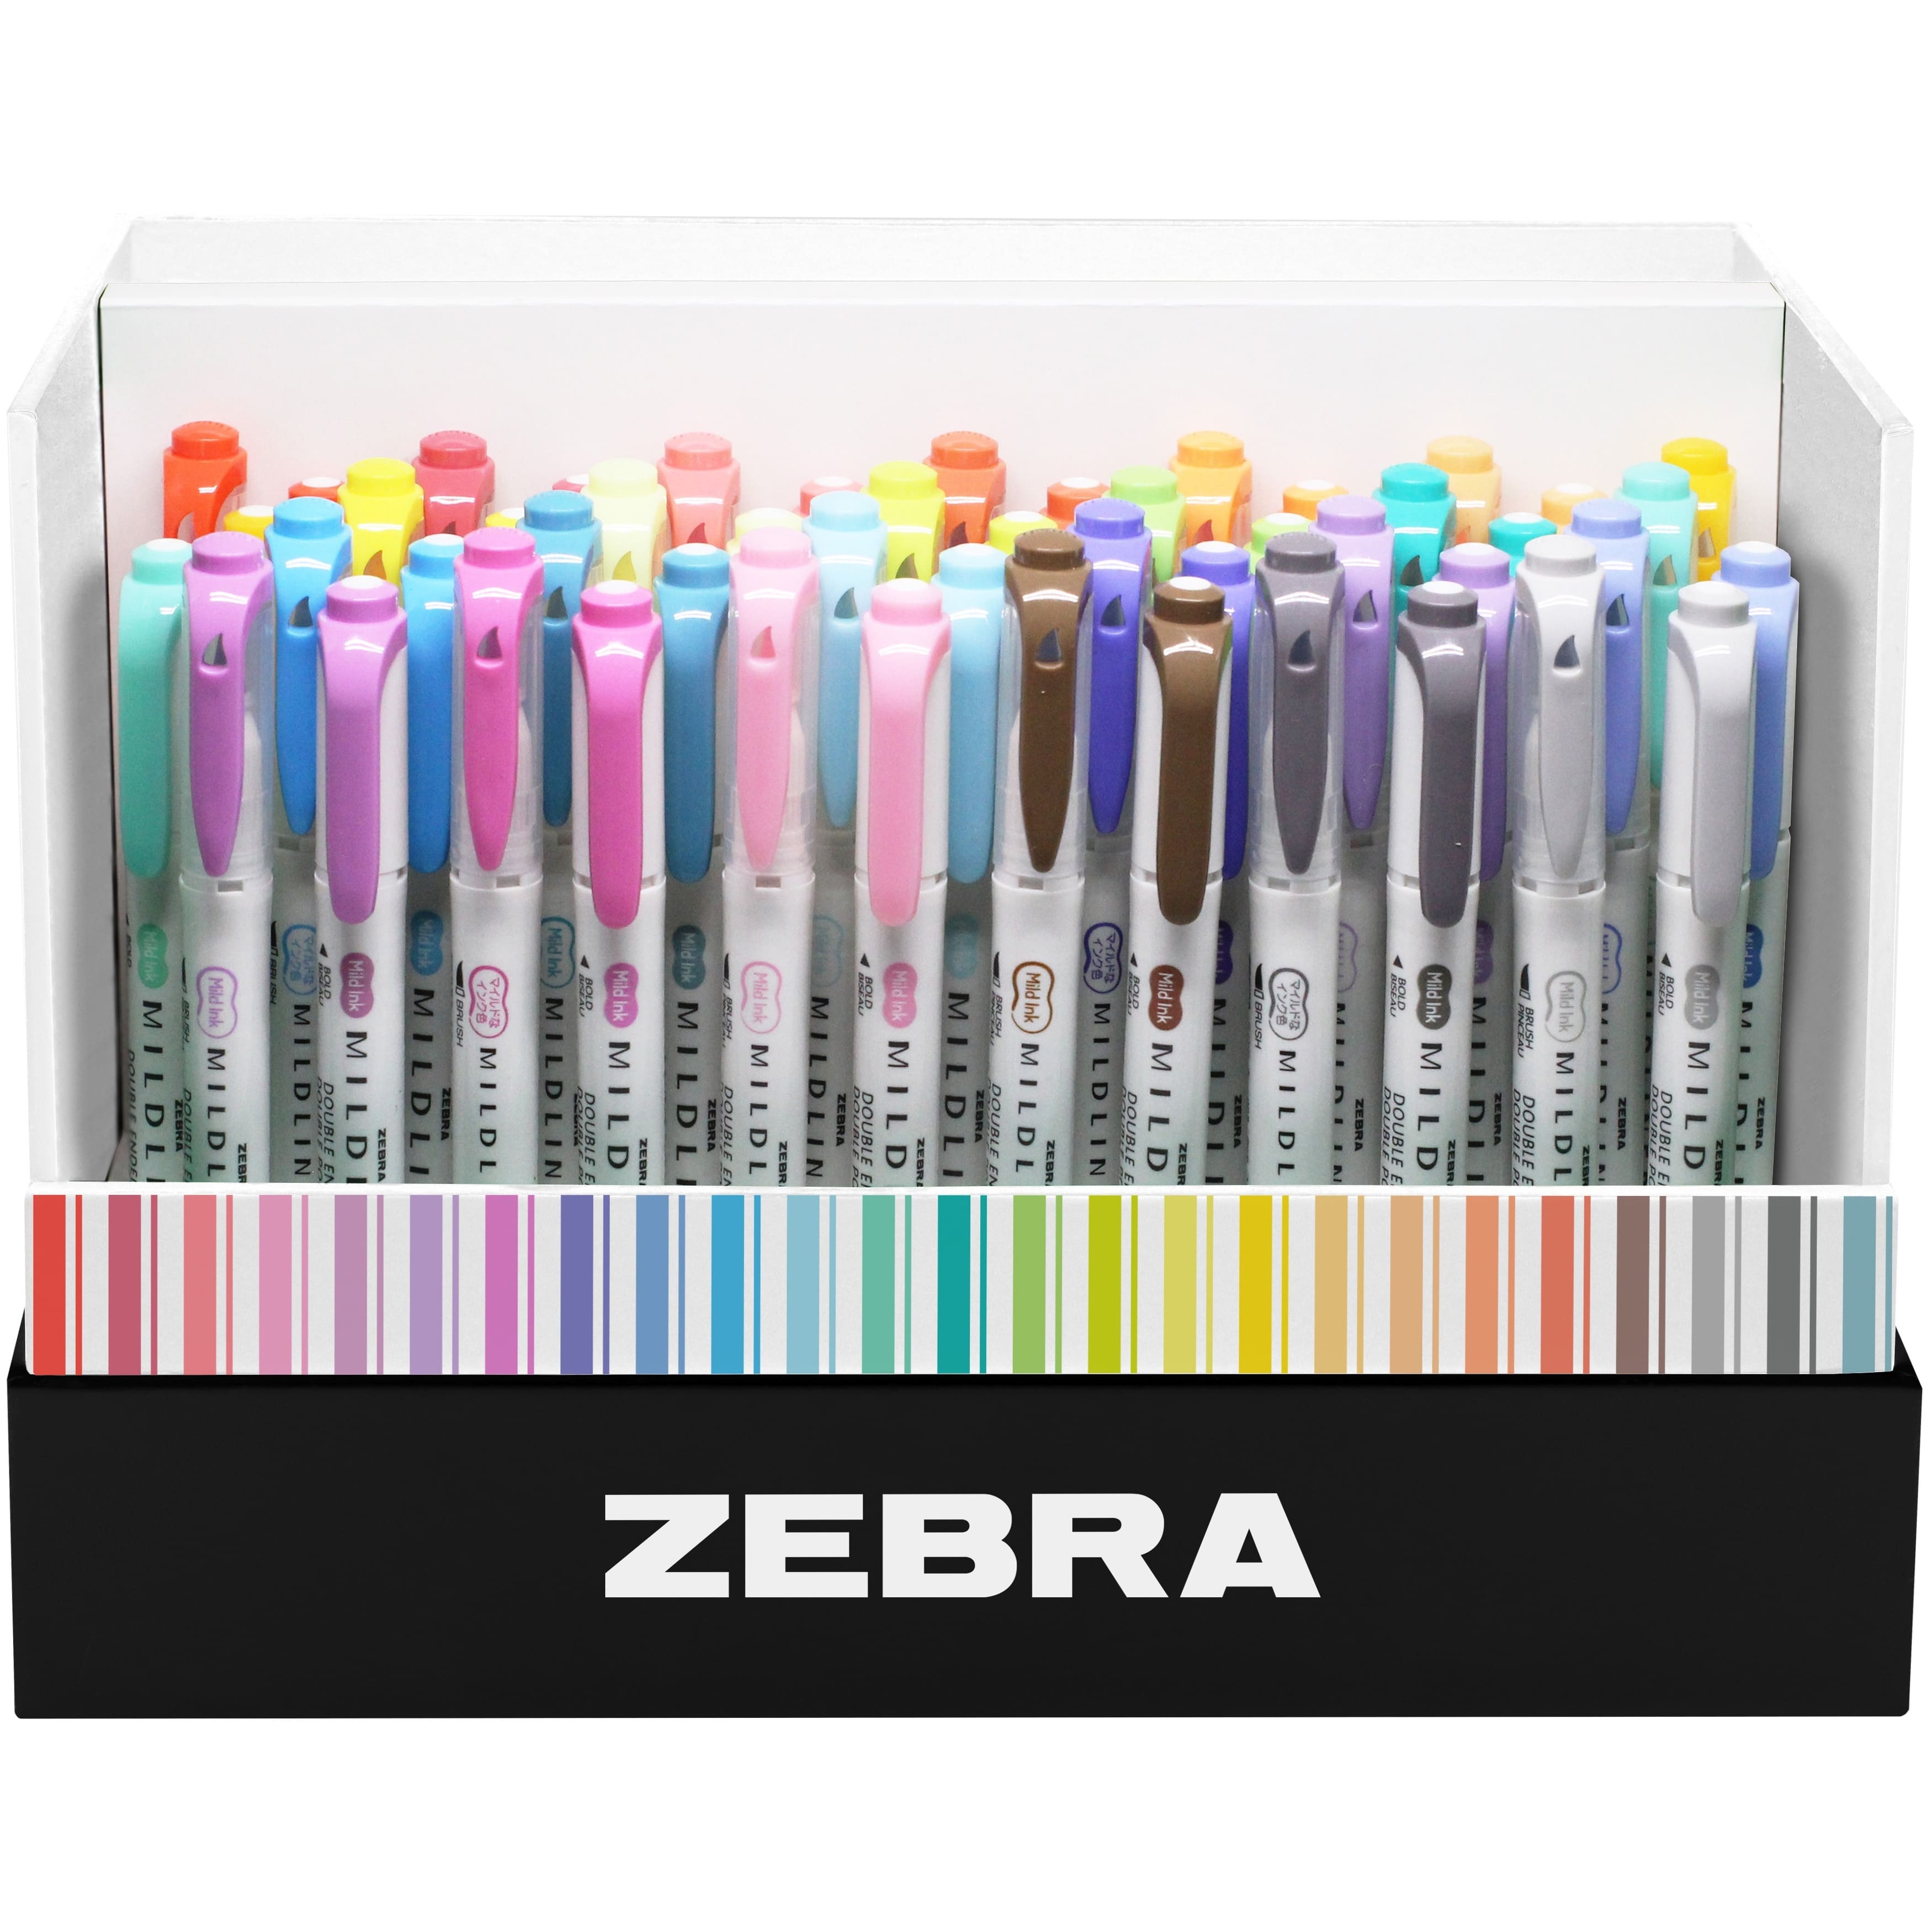 Zebra Mildliner Brush Pen 10 Set Refresh & Friendly